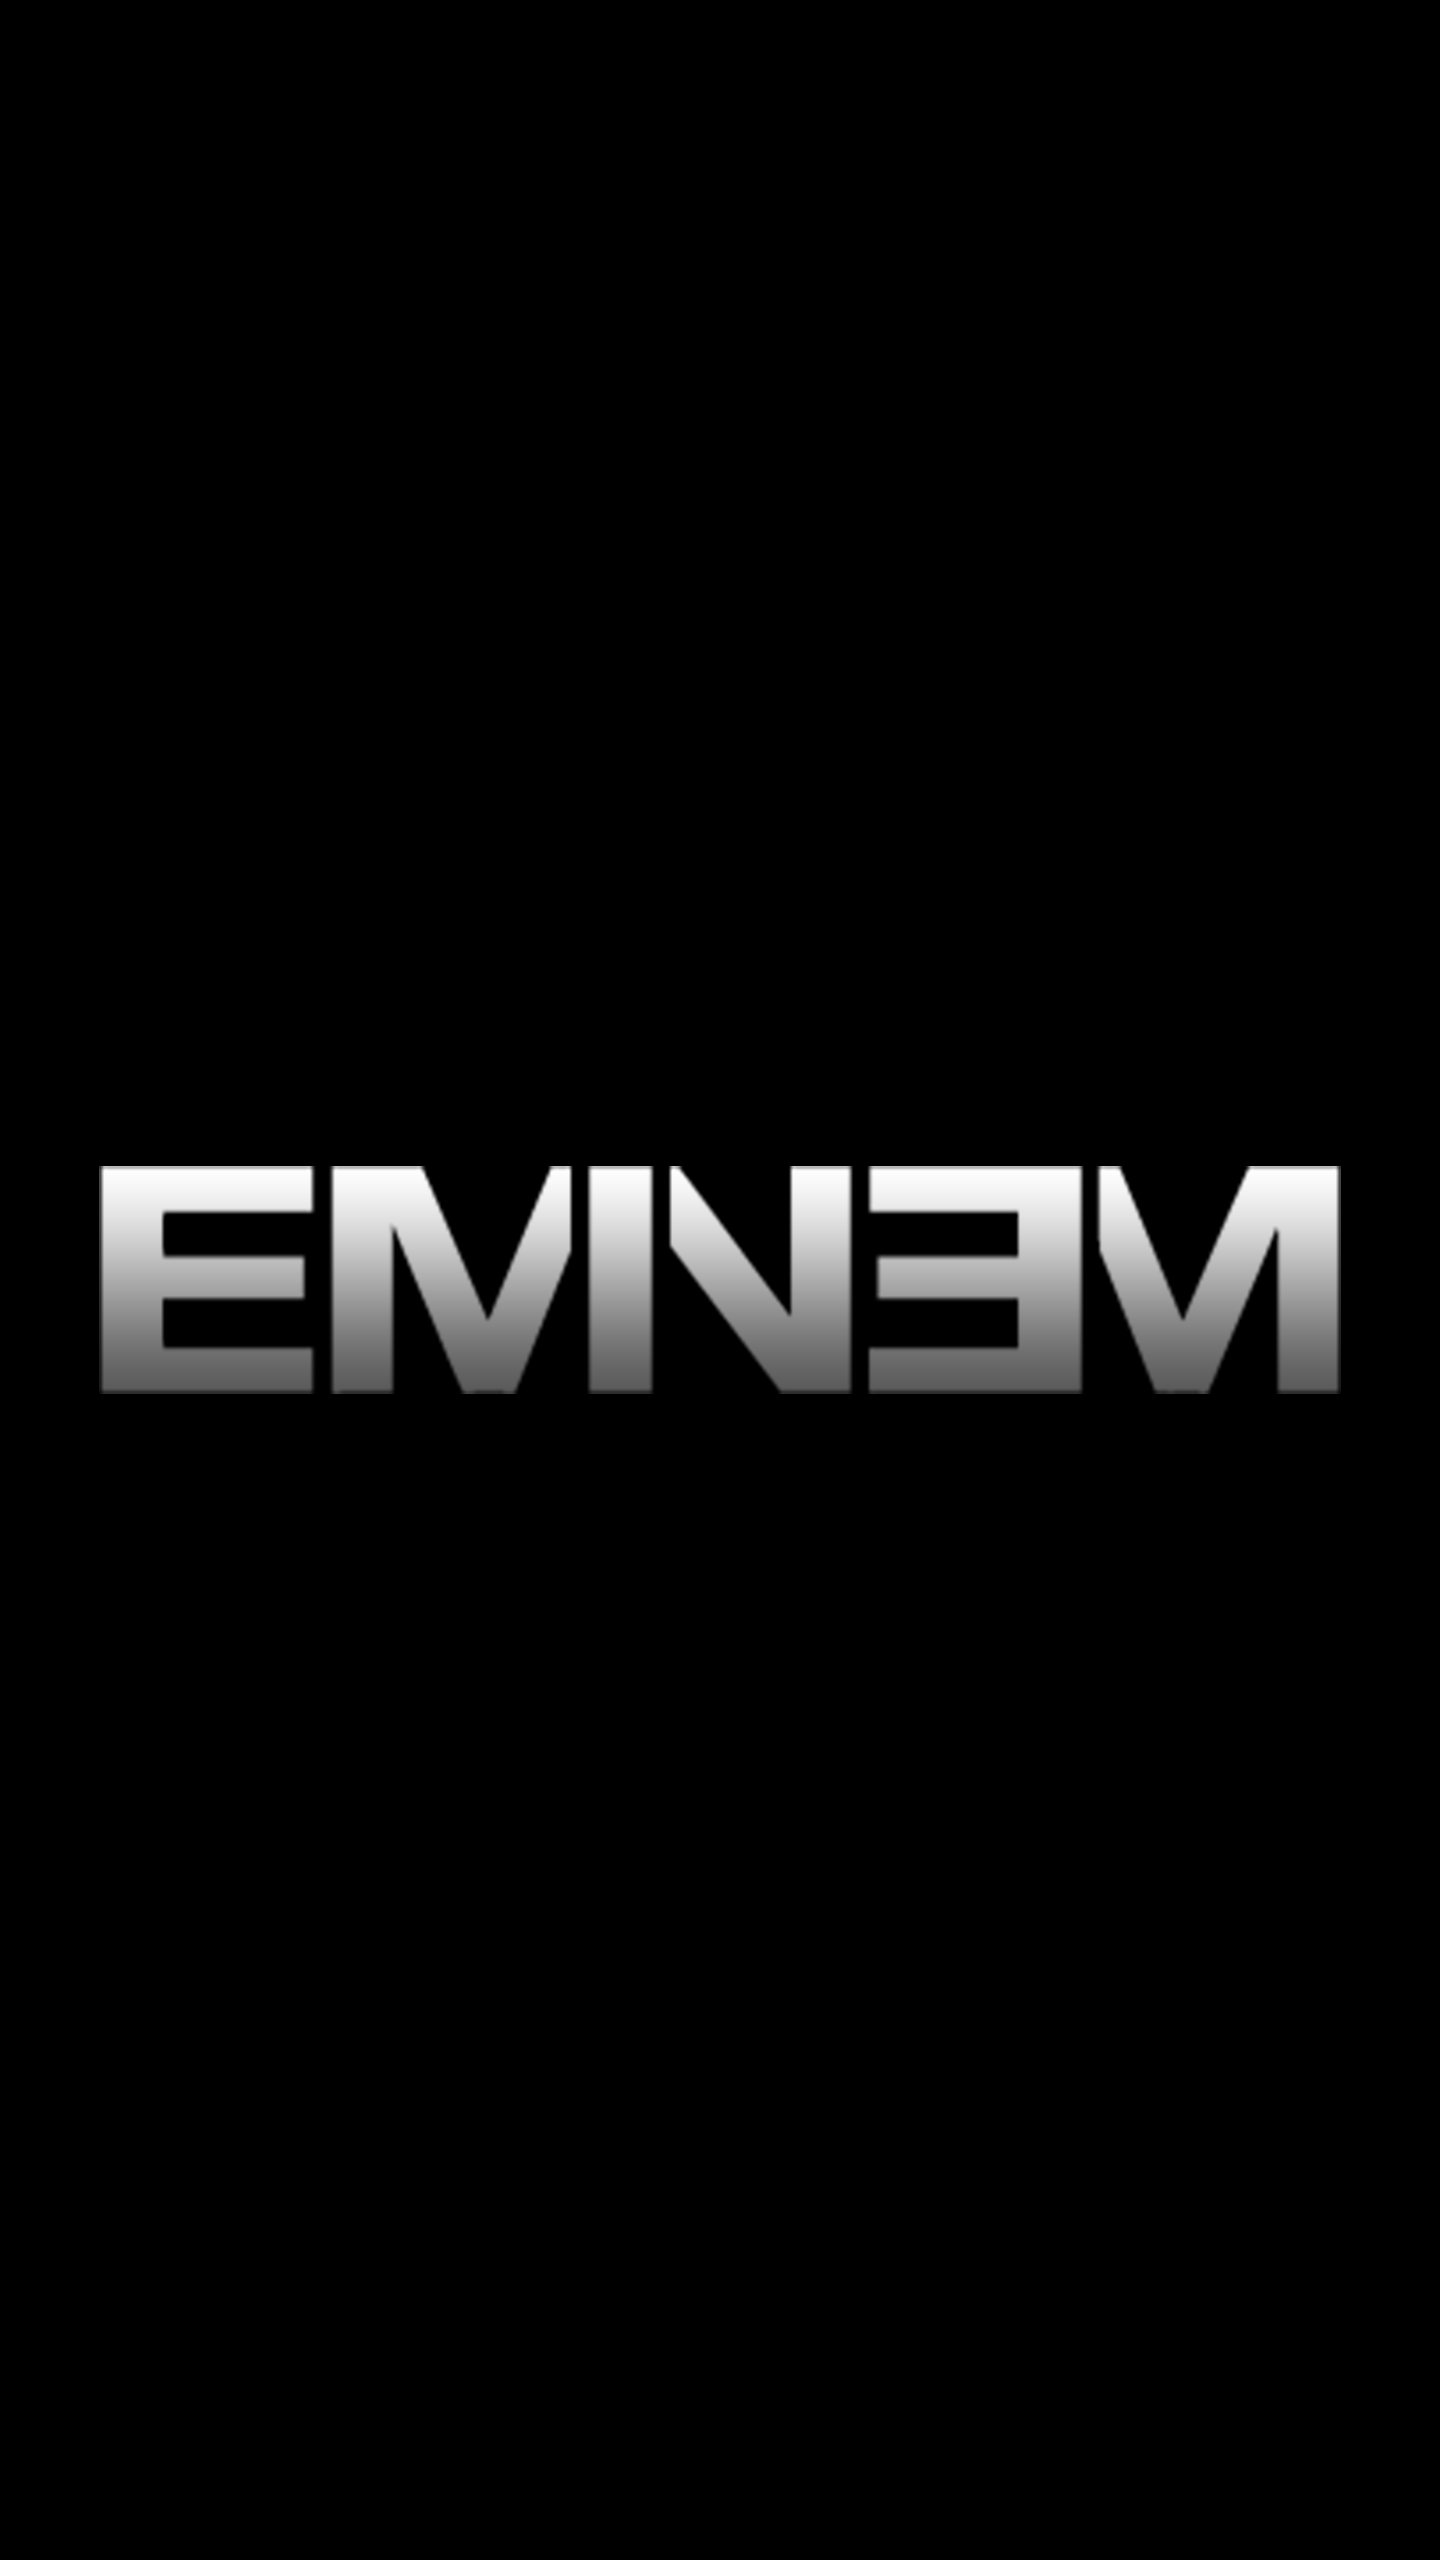 Eminem Logo Wallpapers On Wallpapersafari